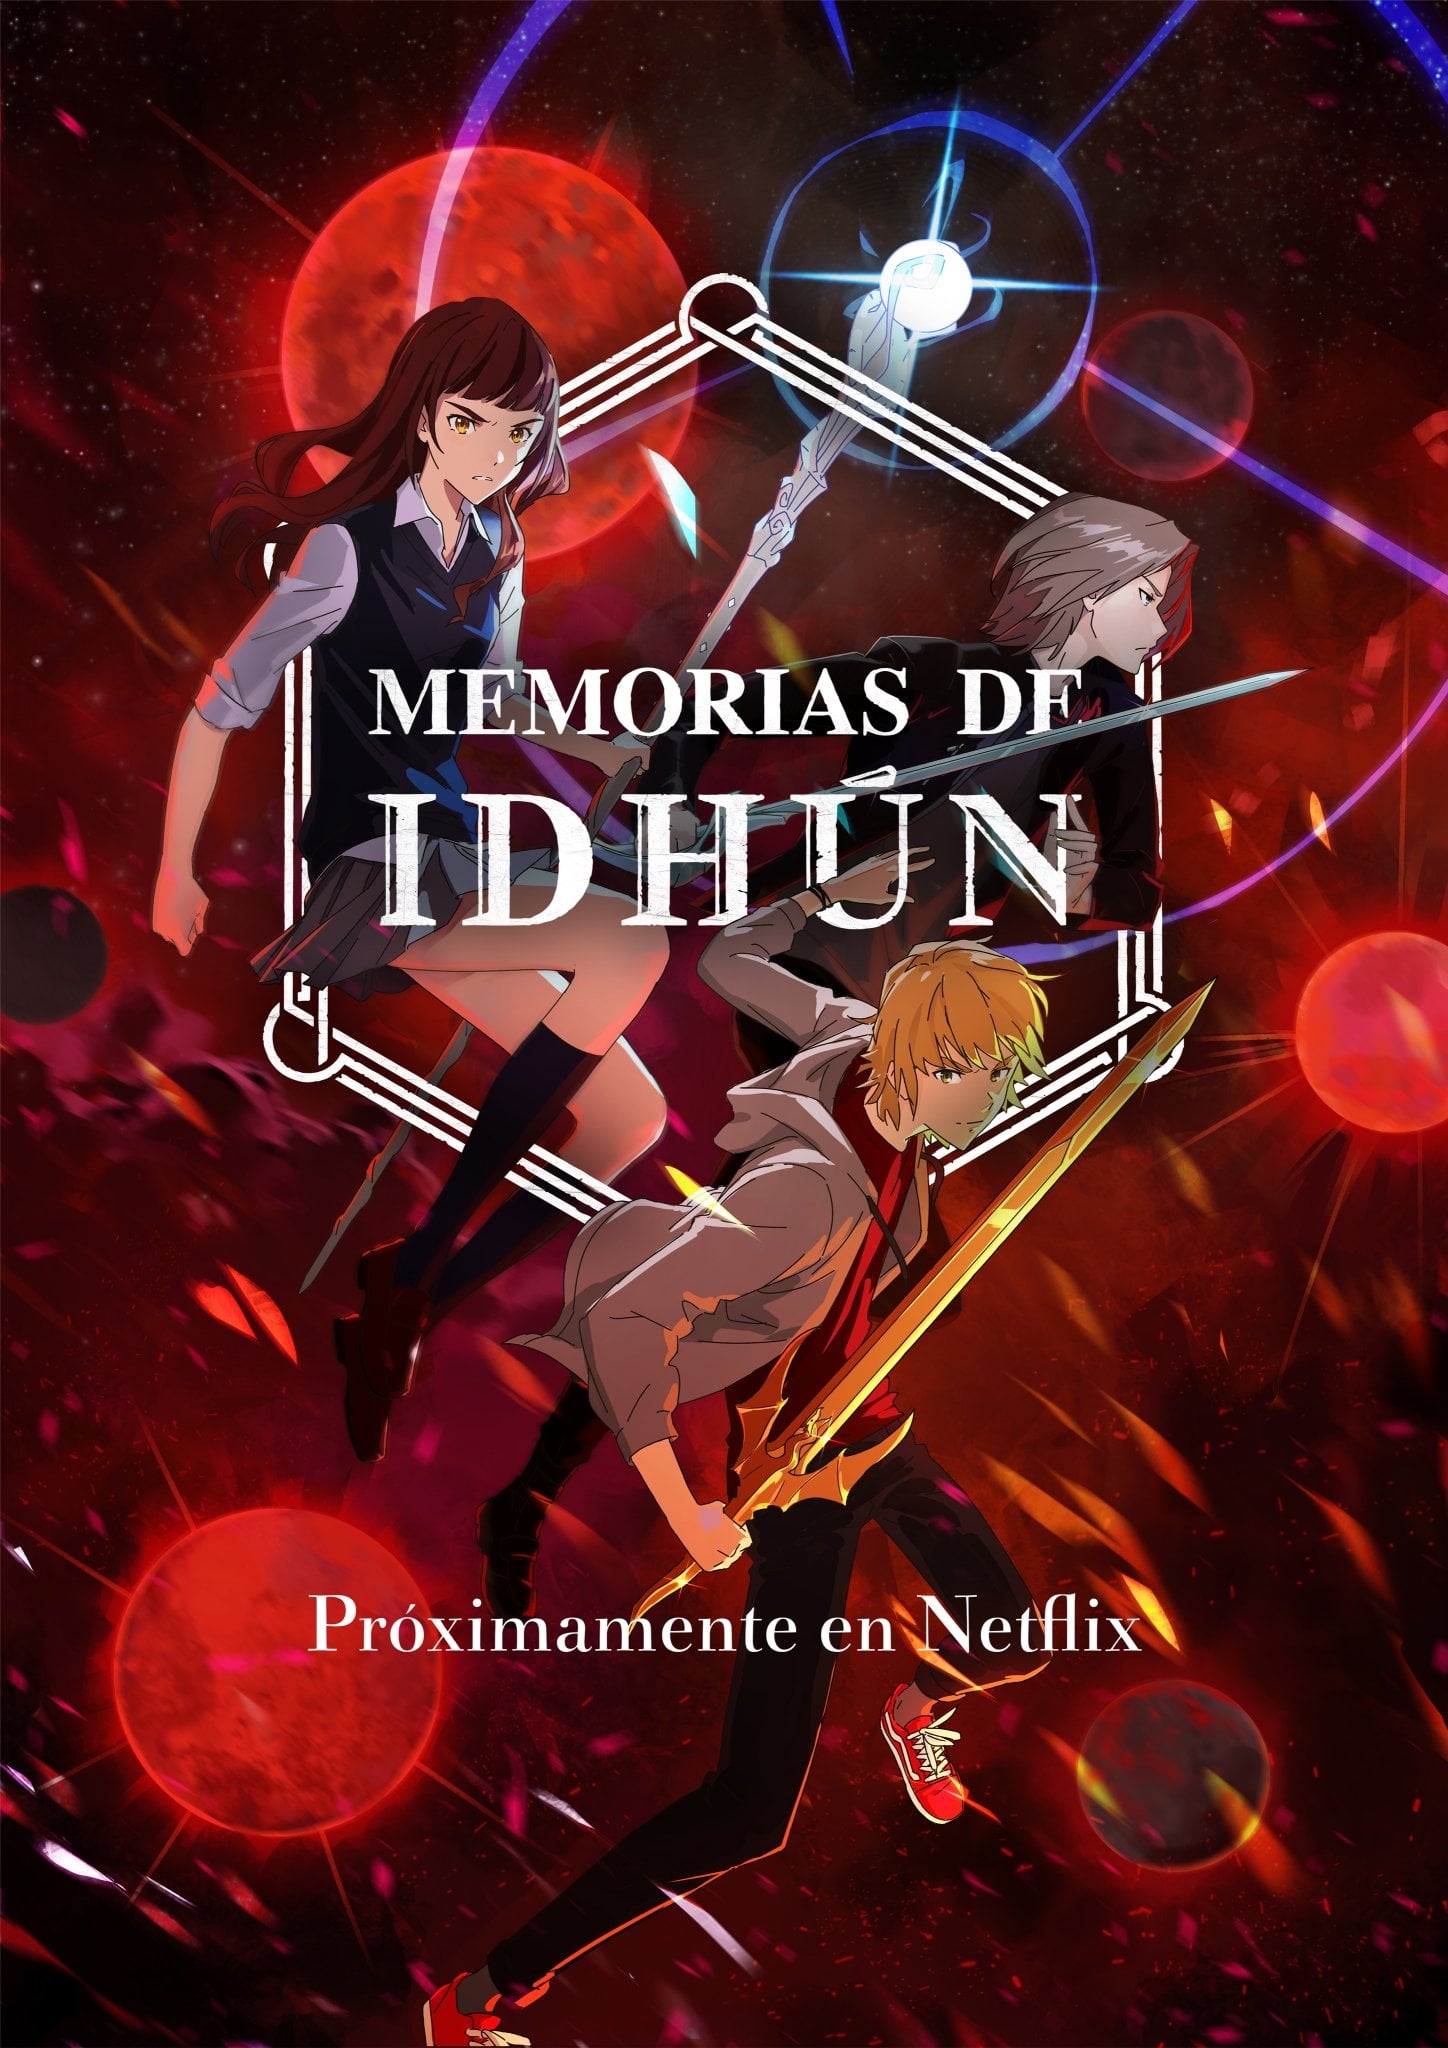 Memorias de Idhún TV Shows About Necromancer